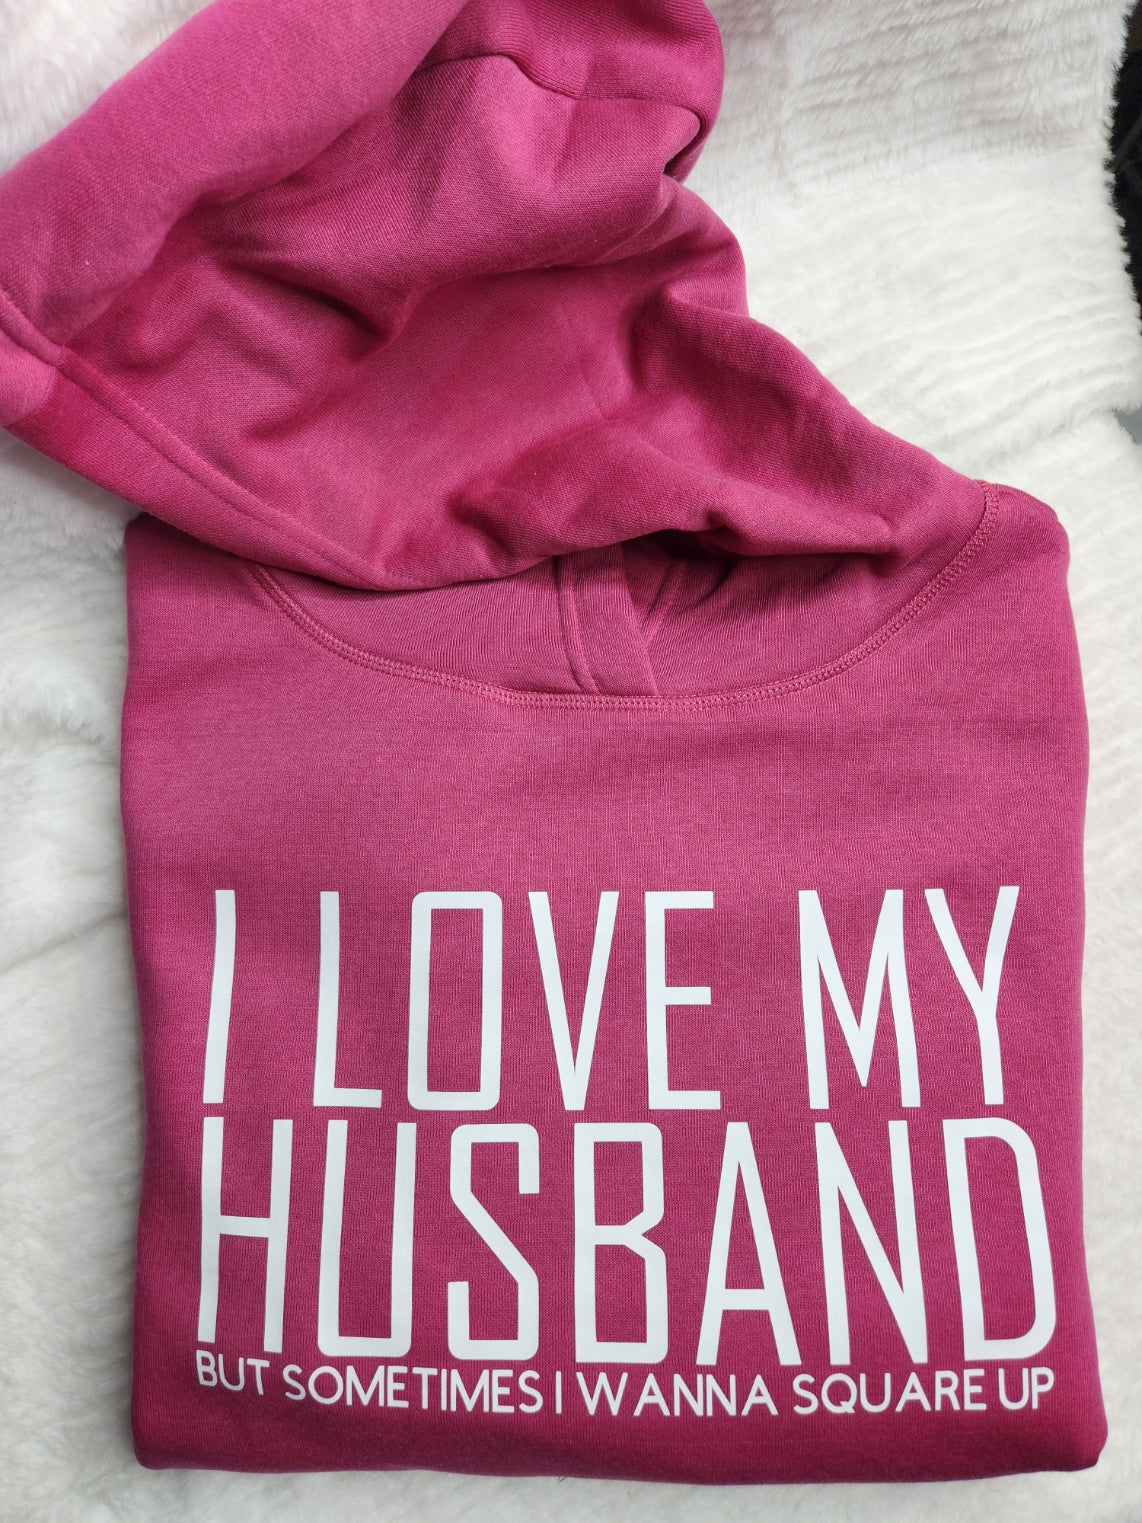 I Love My Husband, but...